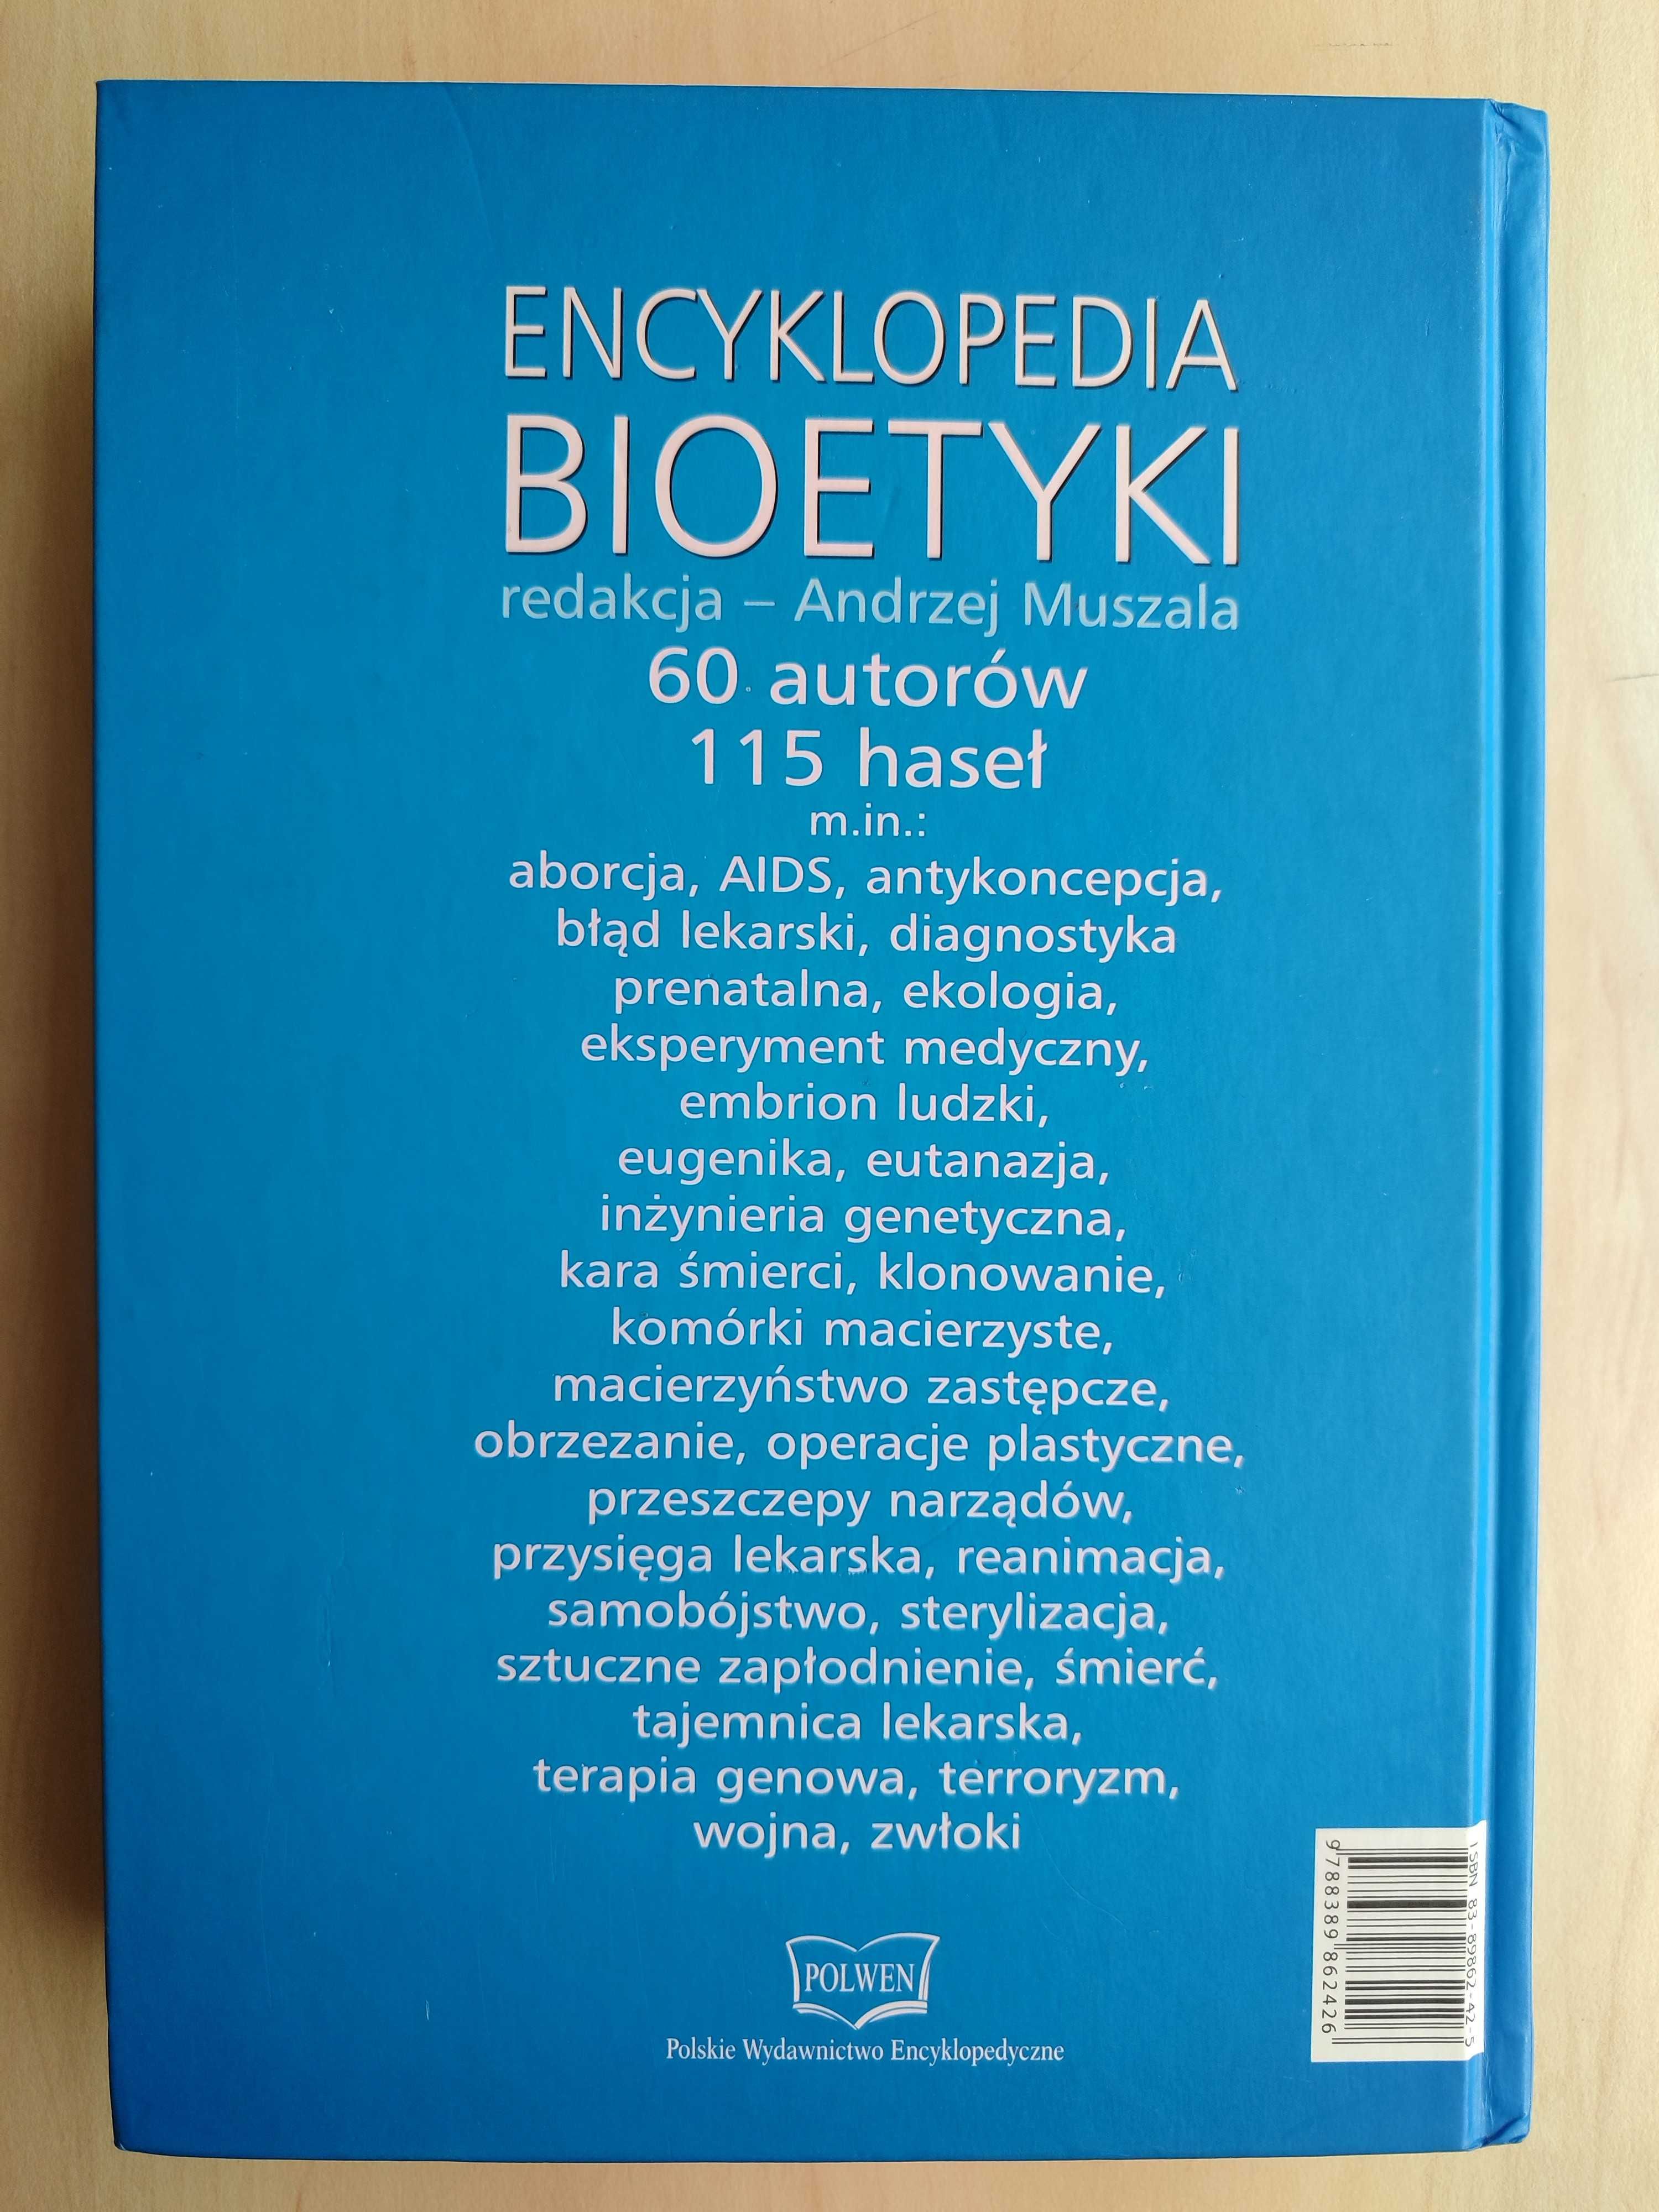 Encyklopedia bioetyki – red. A. Muszala